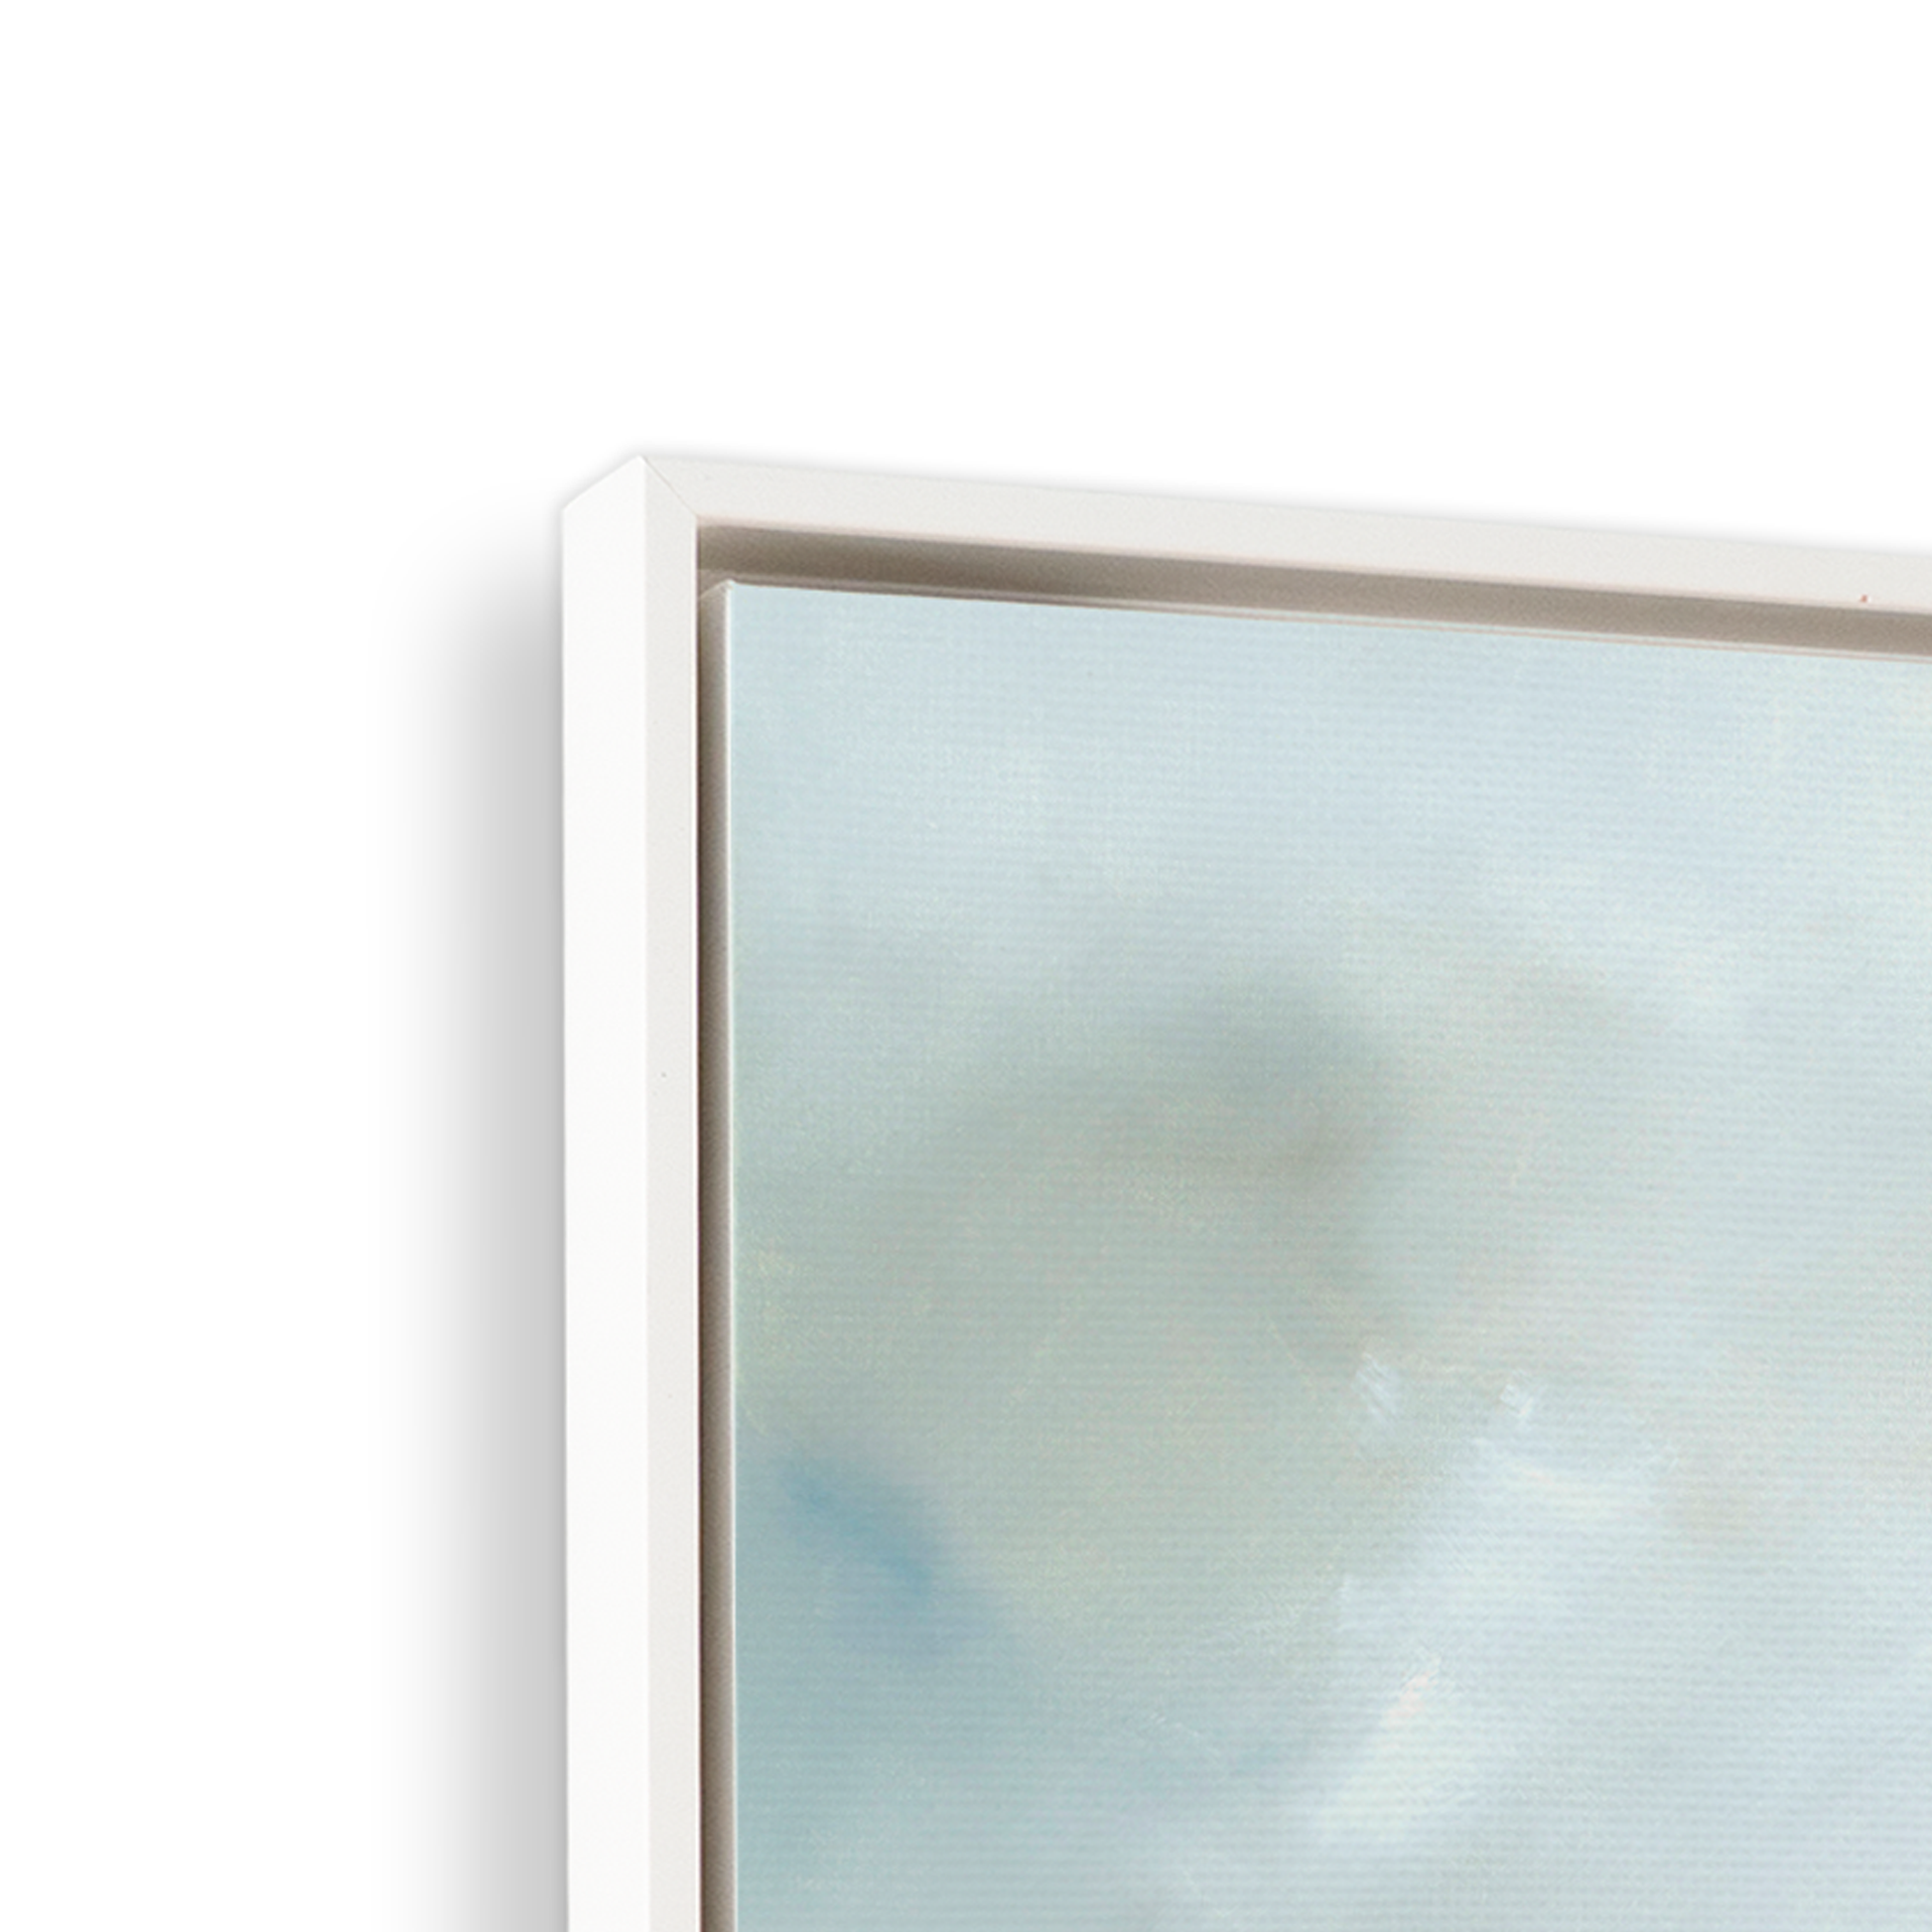 [color:Opaque White],[shape:square], Frame corner detail